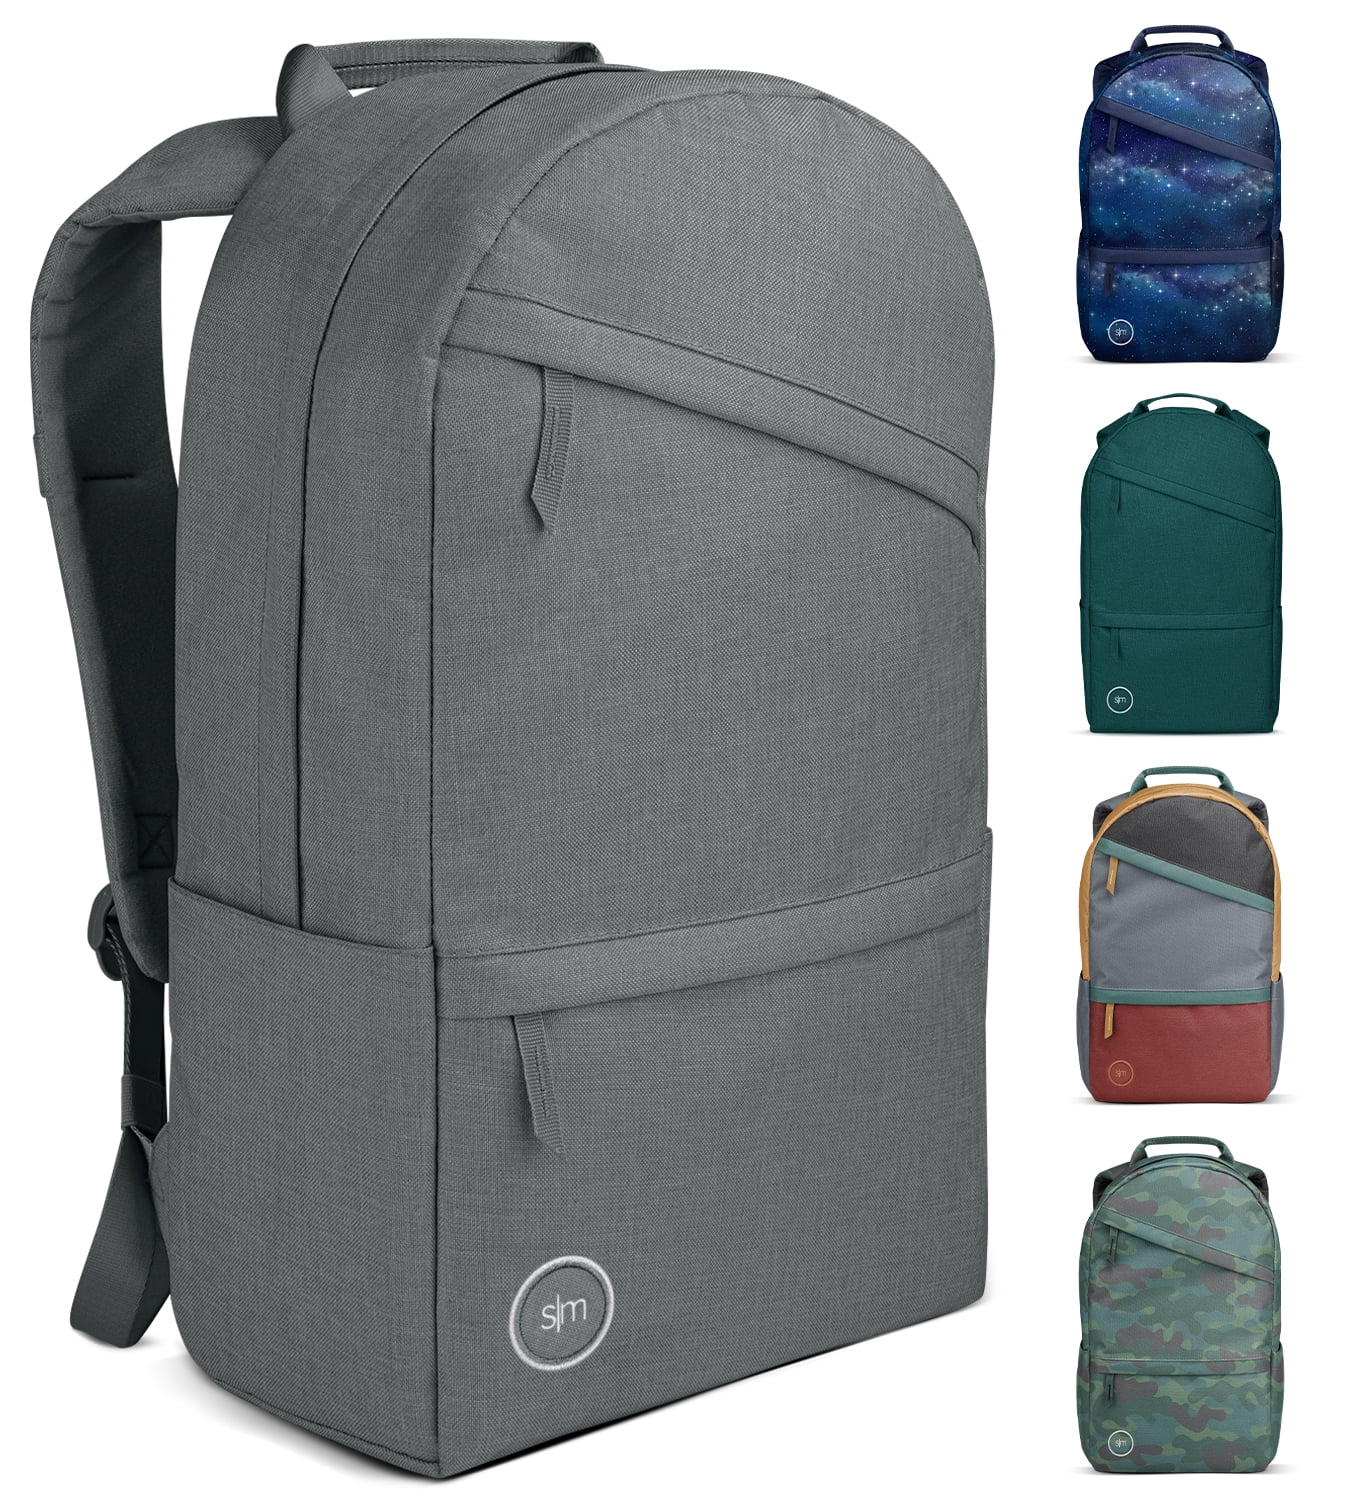 Ssxvjaioervrf Arnold Schwarzenegger Conquer Rucksack Laptop Backpack Casual Day Packs for School Travel Hiking 